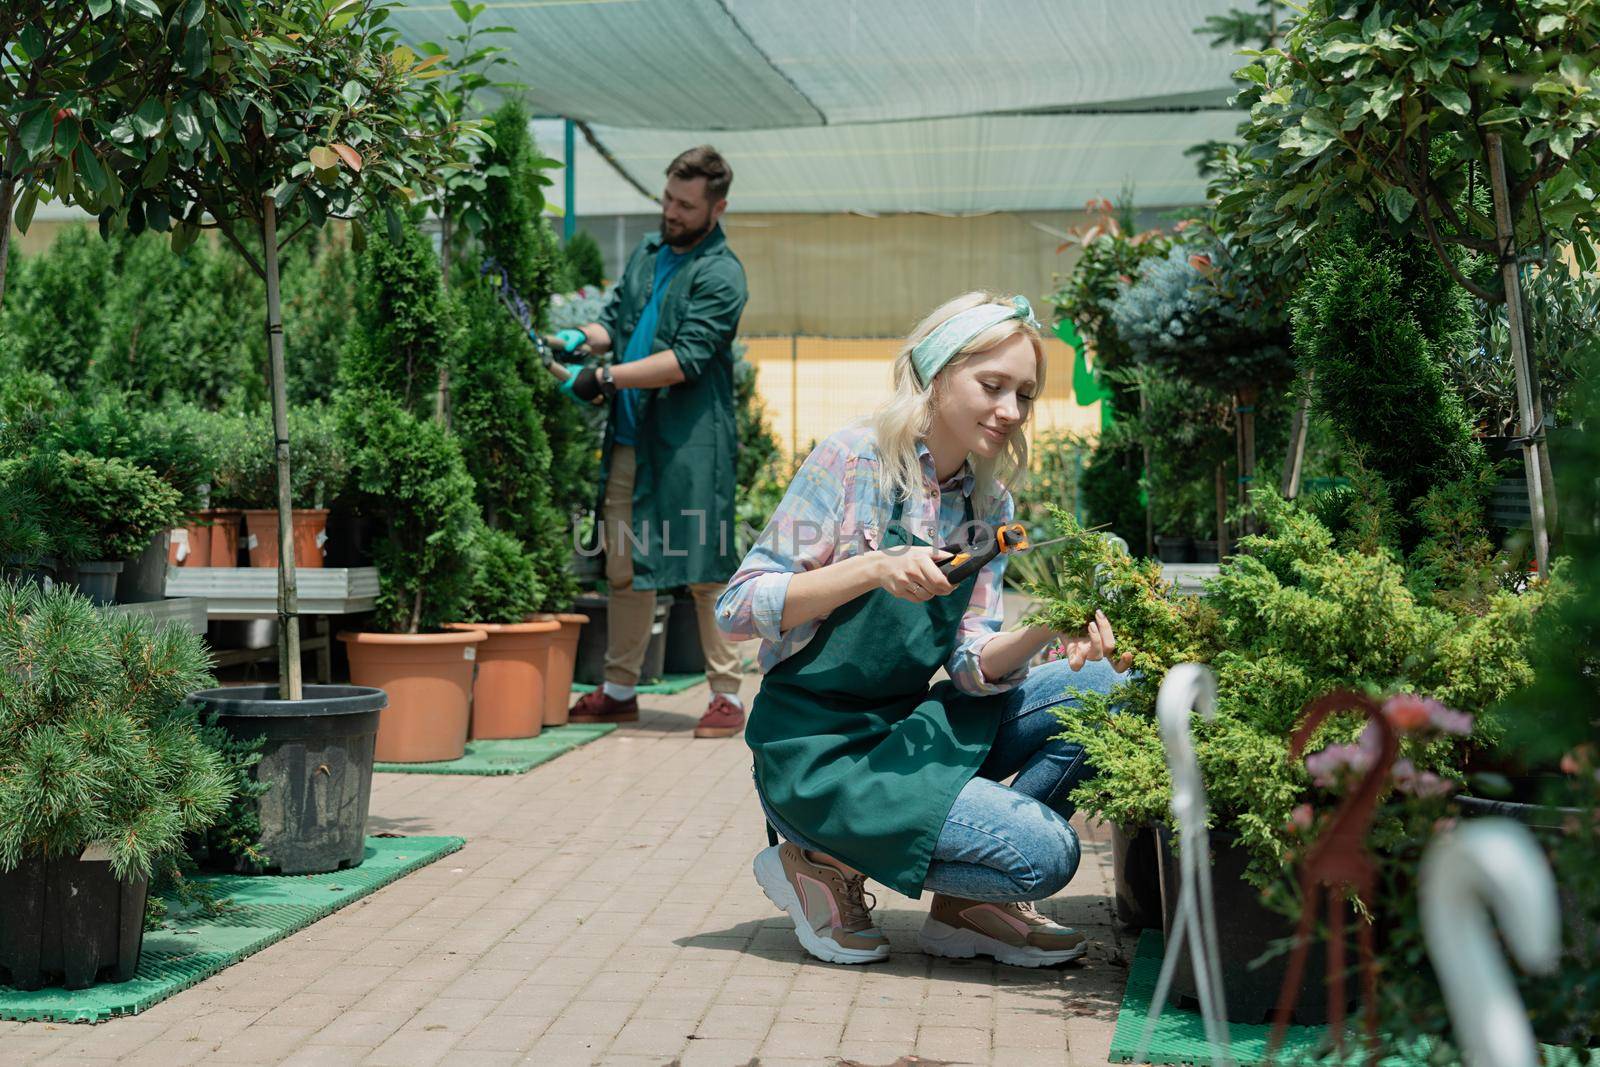 Gardeners work in modern nursery plant store in greenhouse by Mariakray